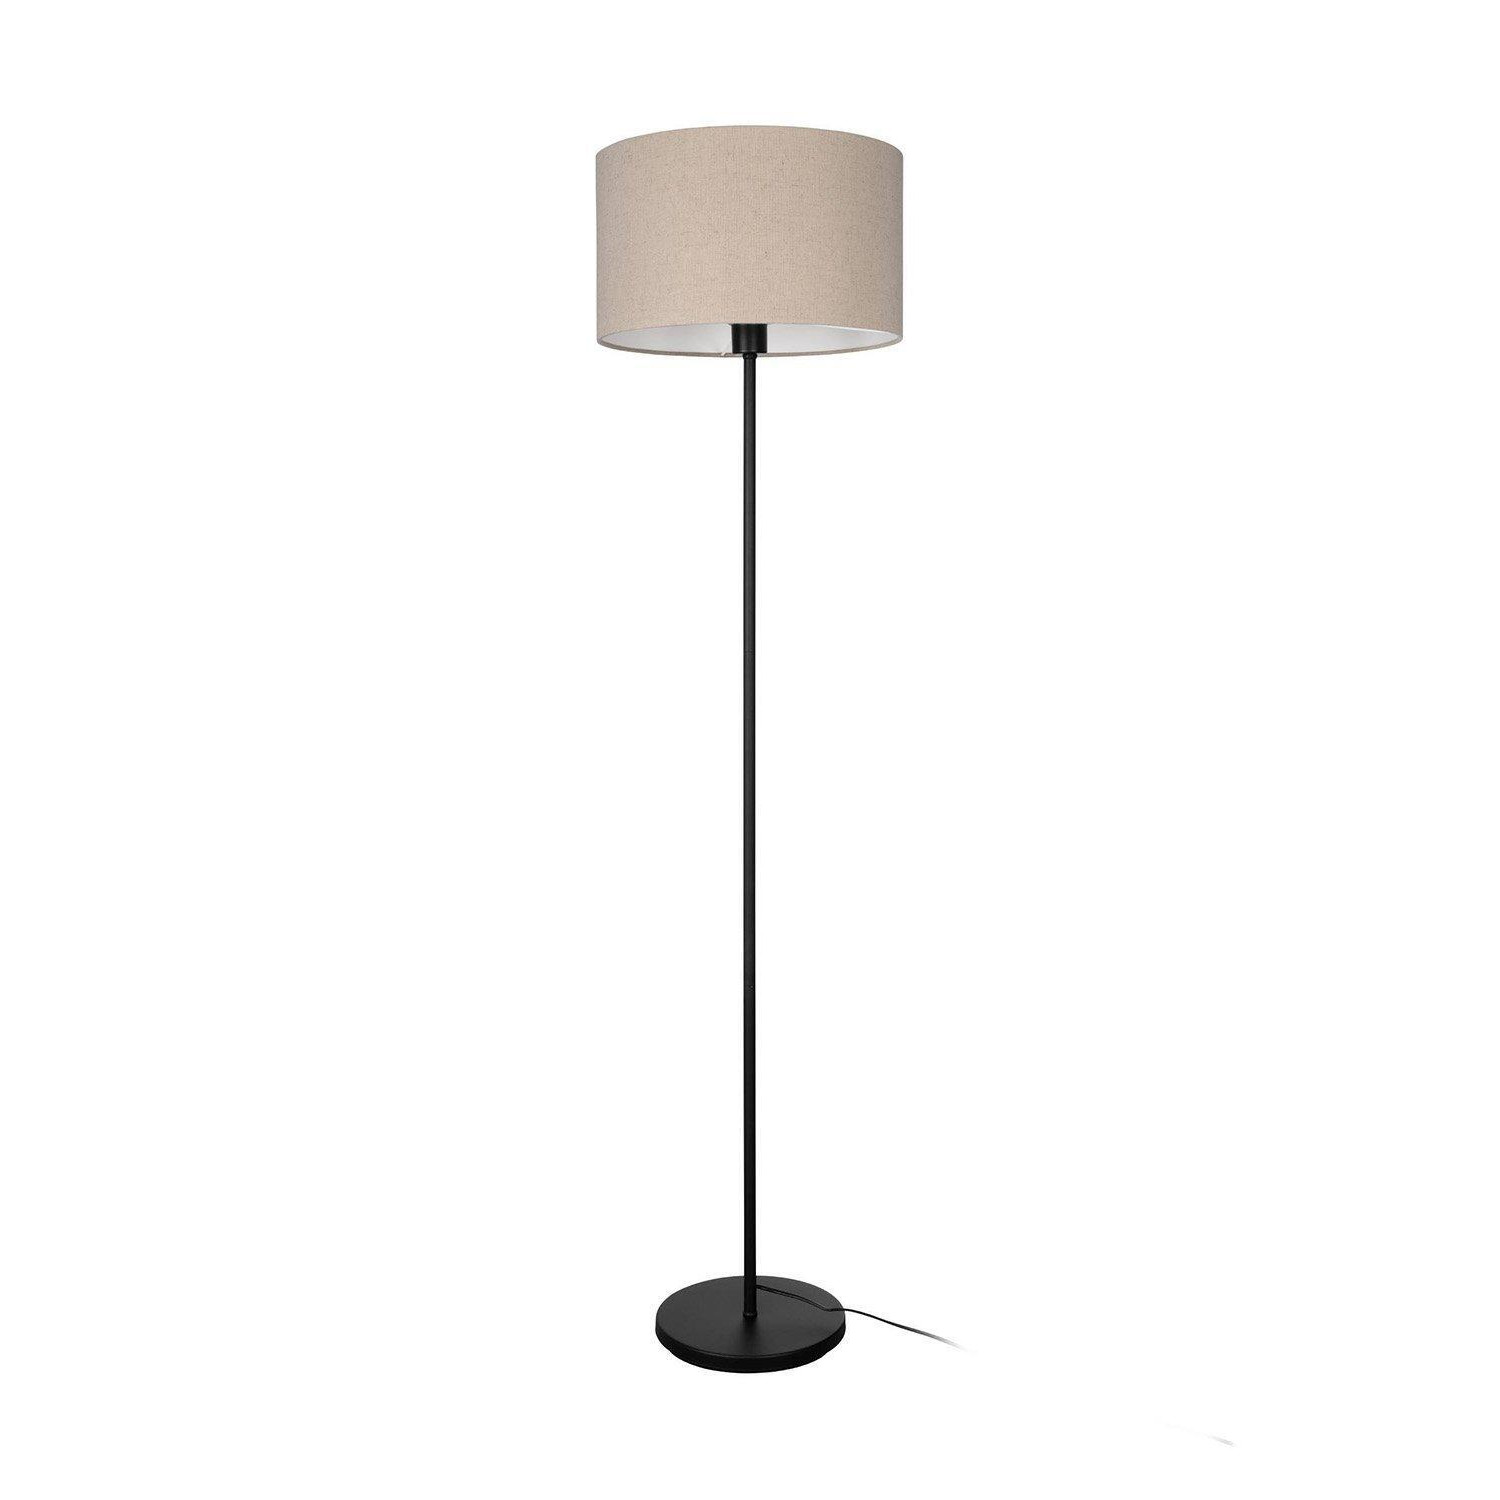 Feniglia Natural Linen Drum-Shaped Floor Lamp - image 1